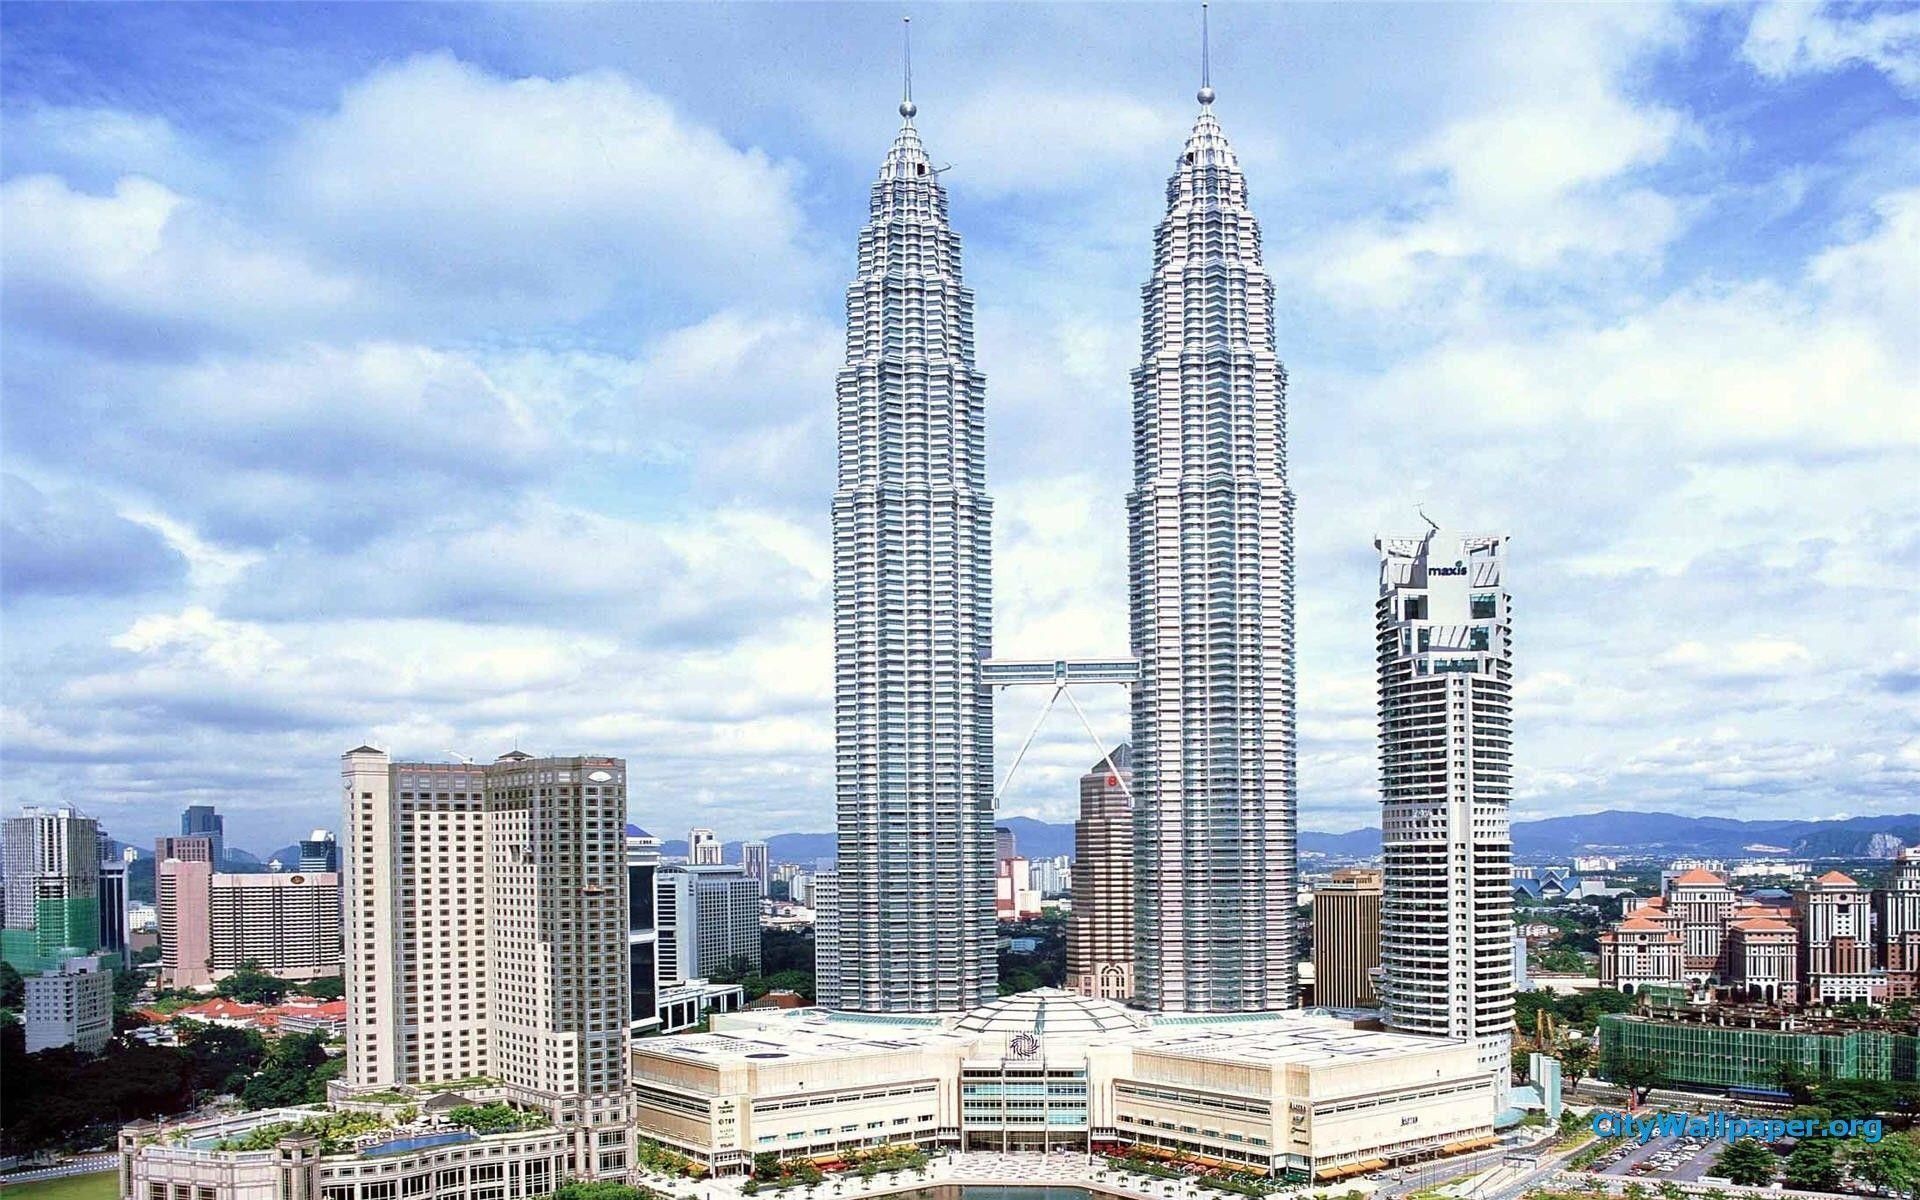 Petronas Towers Wallpaper